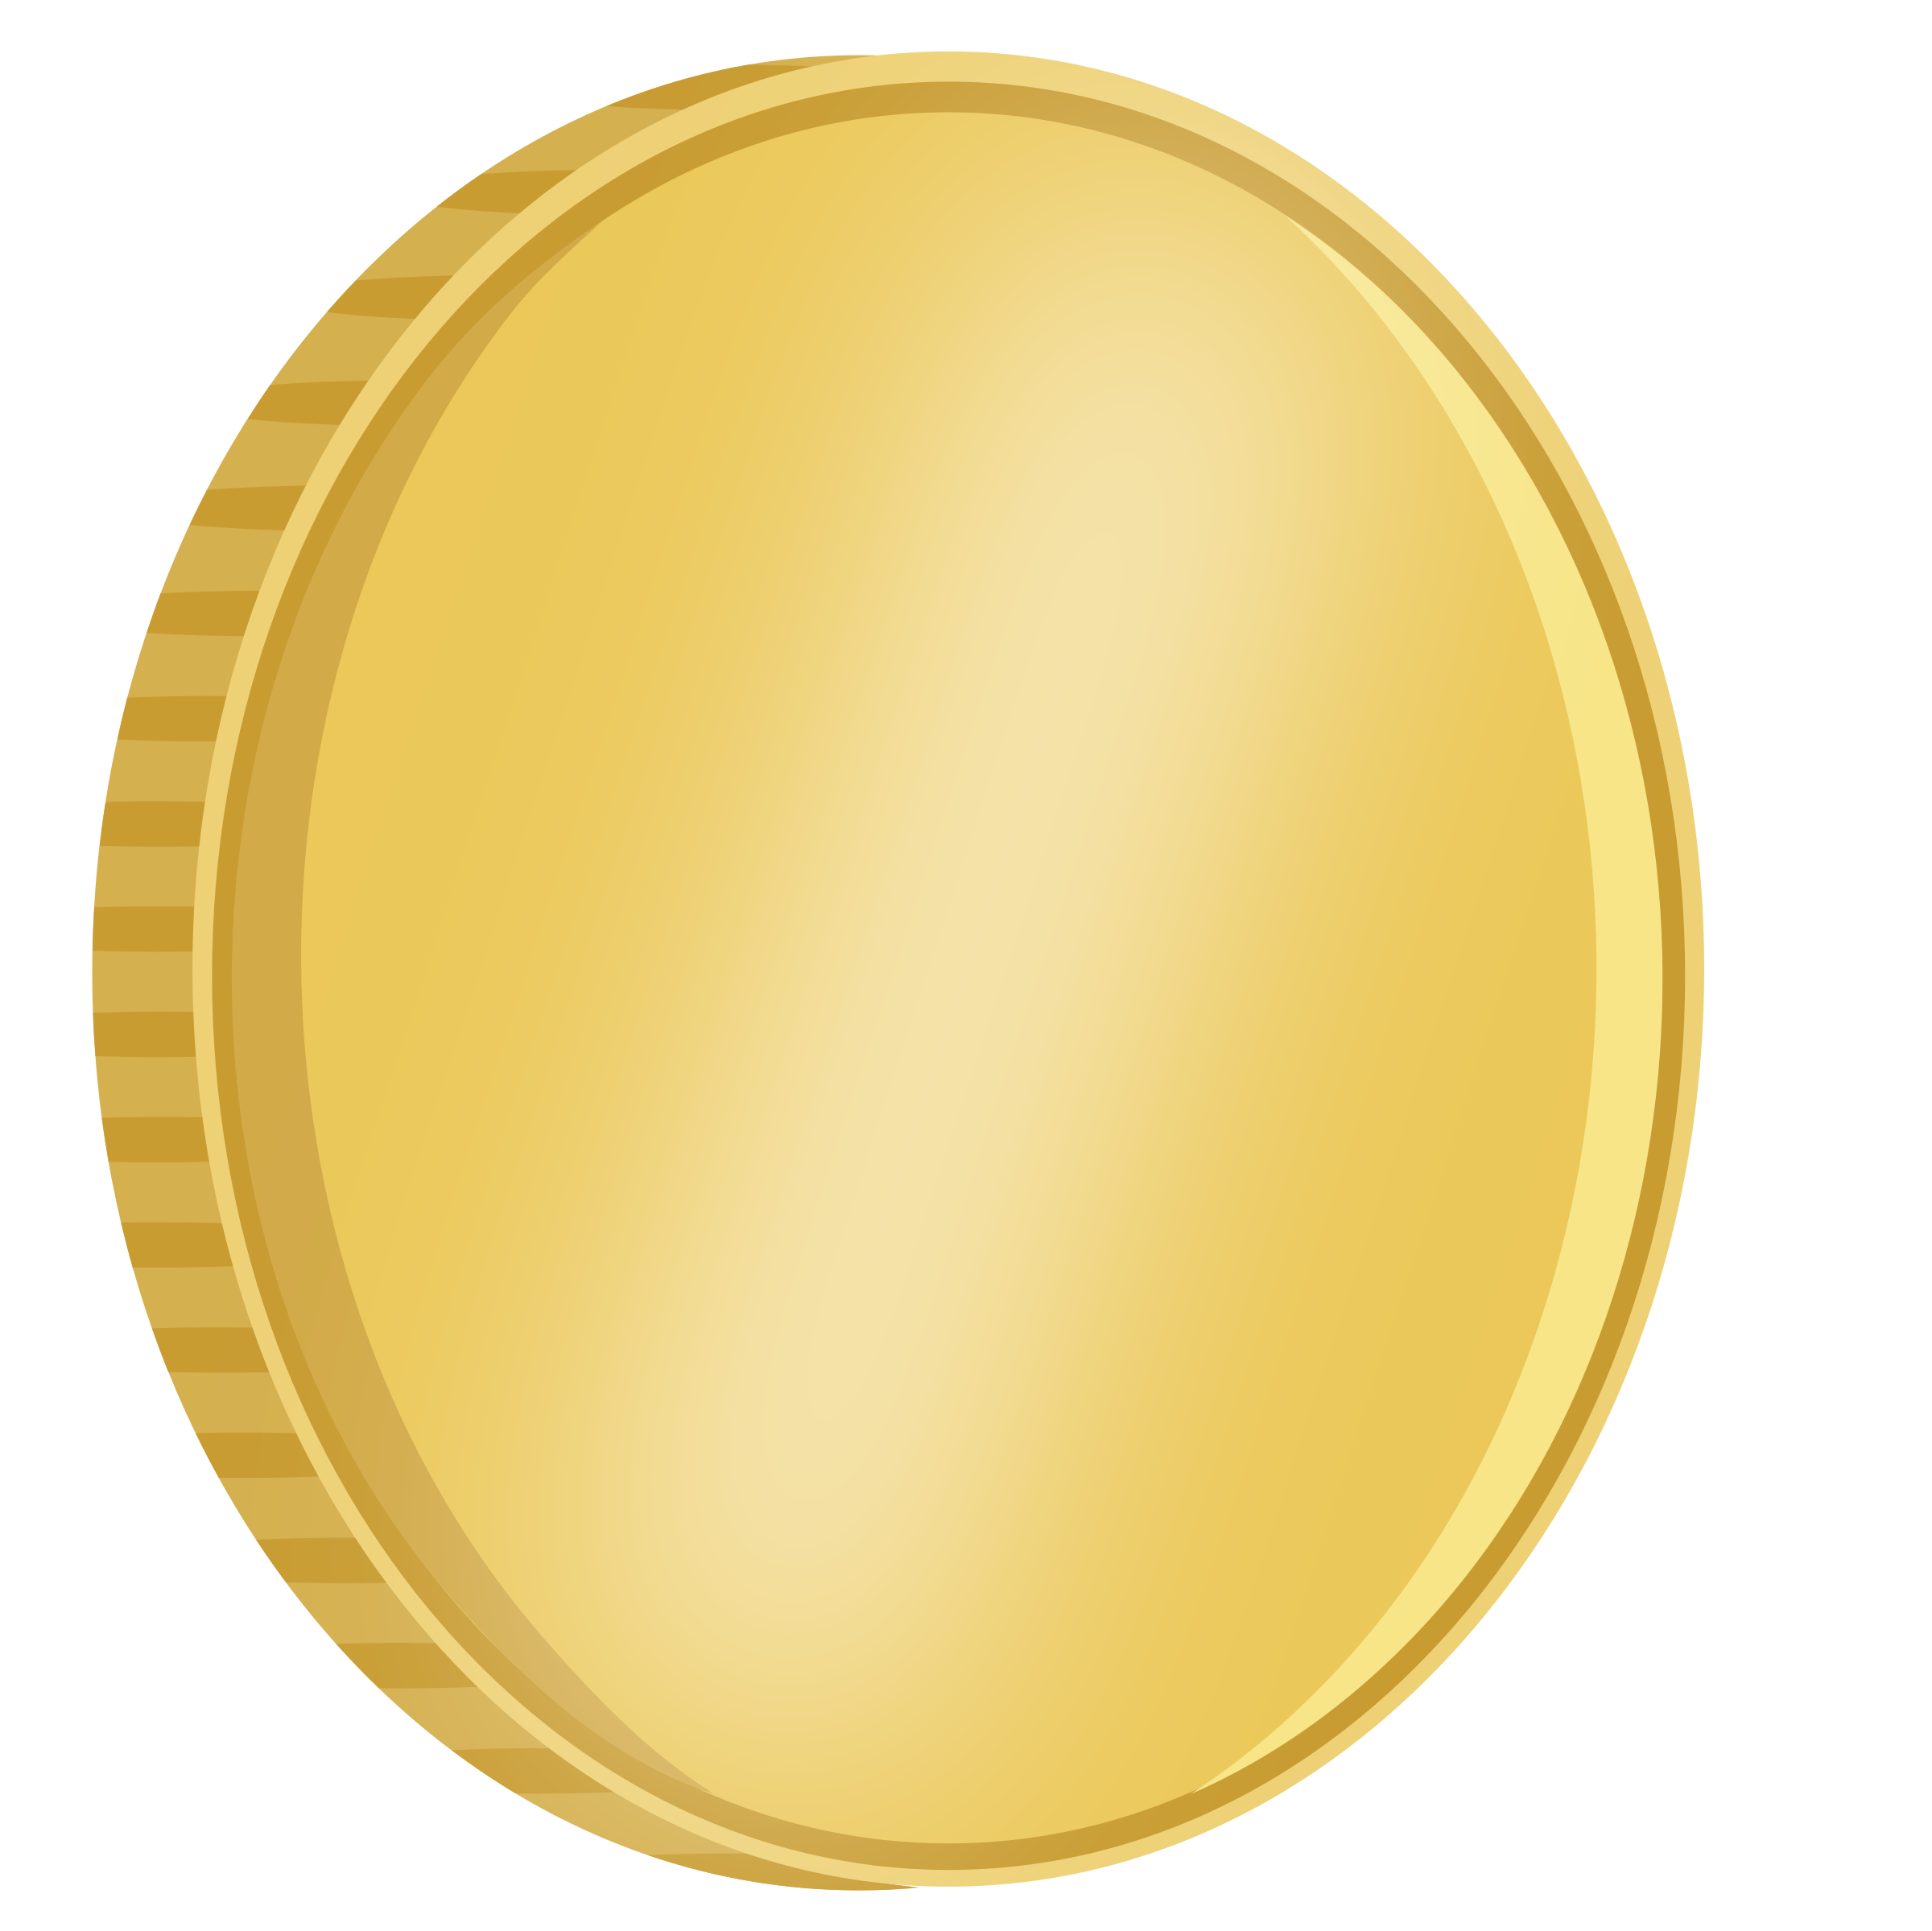 Similar Coins PNG Image